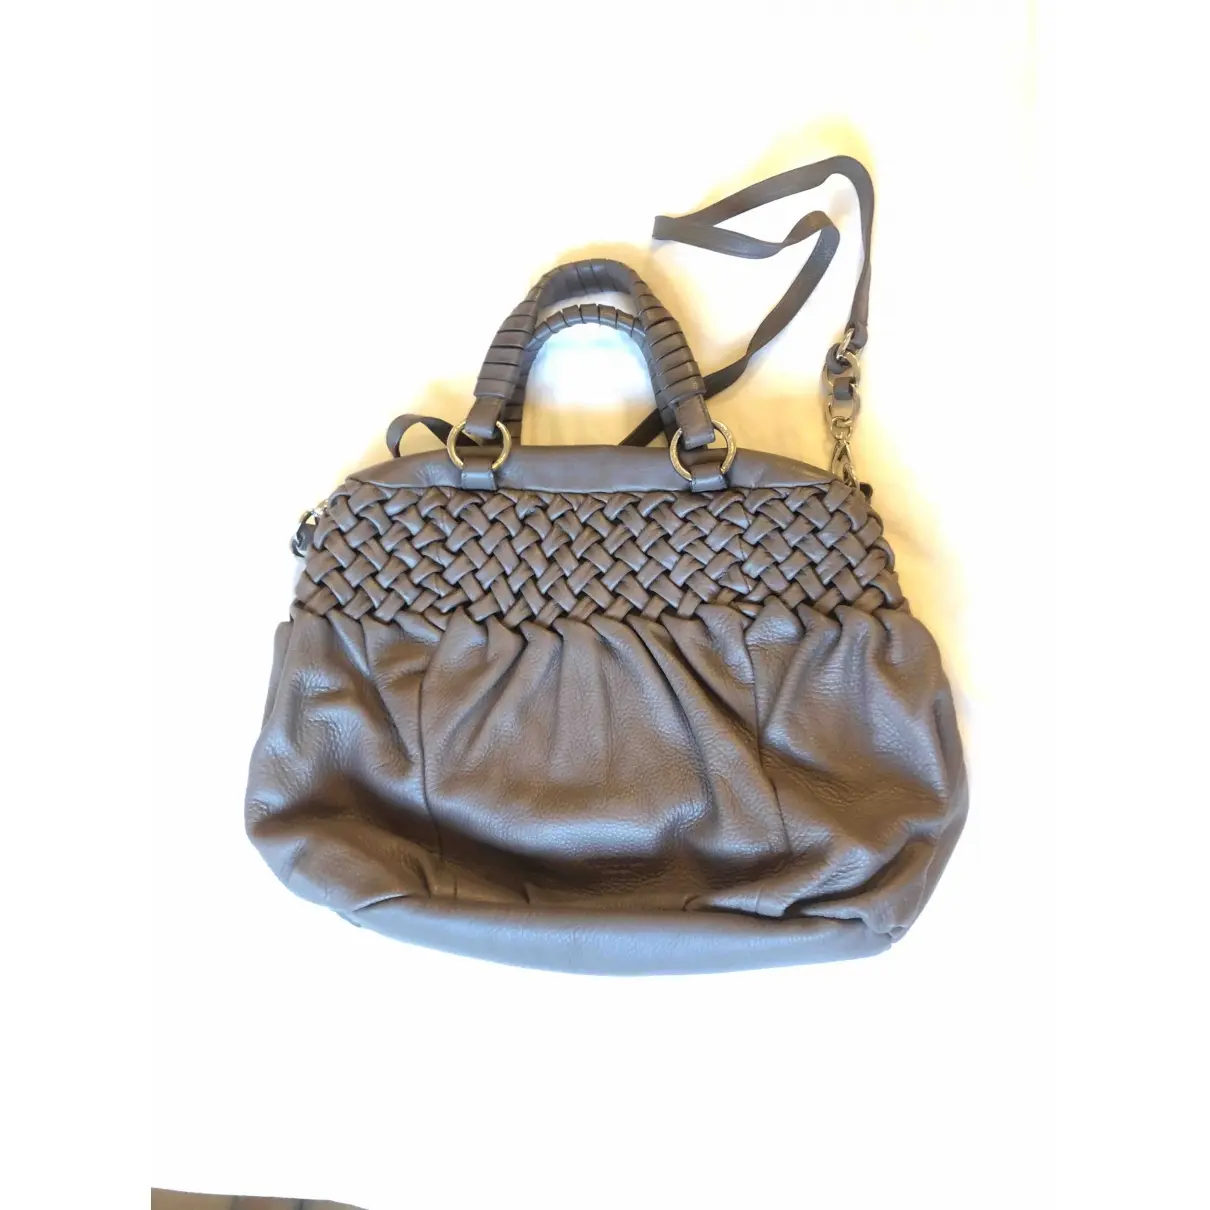 Tosca Blu Leather handbag for sale